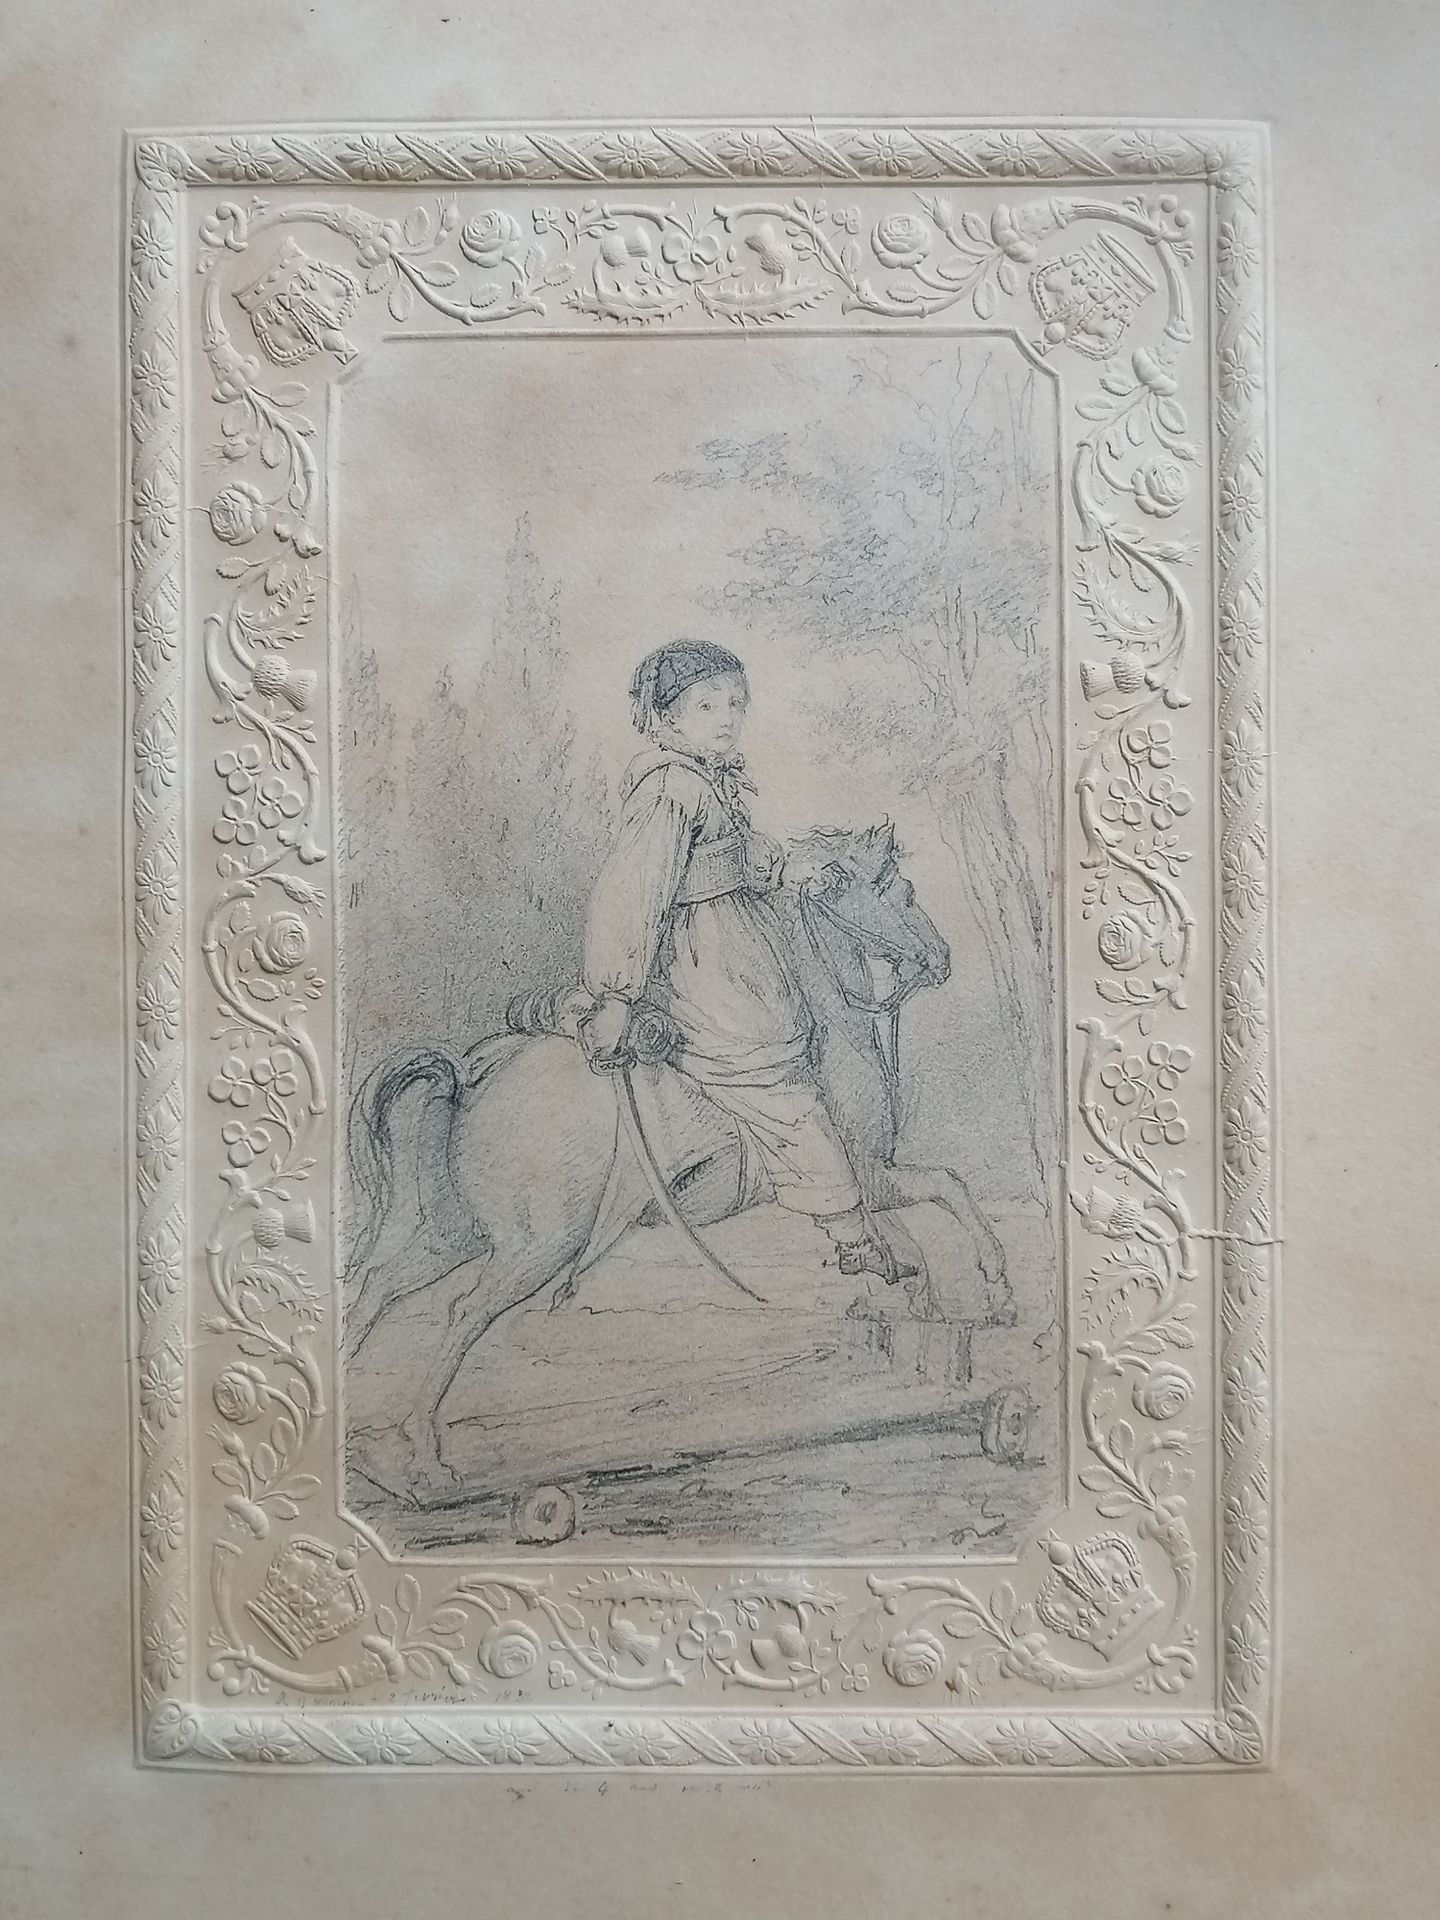 Null Siglo XIX ESCUELA FRANCESA

Dibujo a lápiz

Retrato de un joven con traje m&hellip;